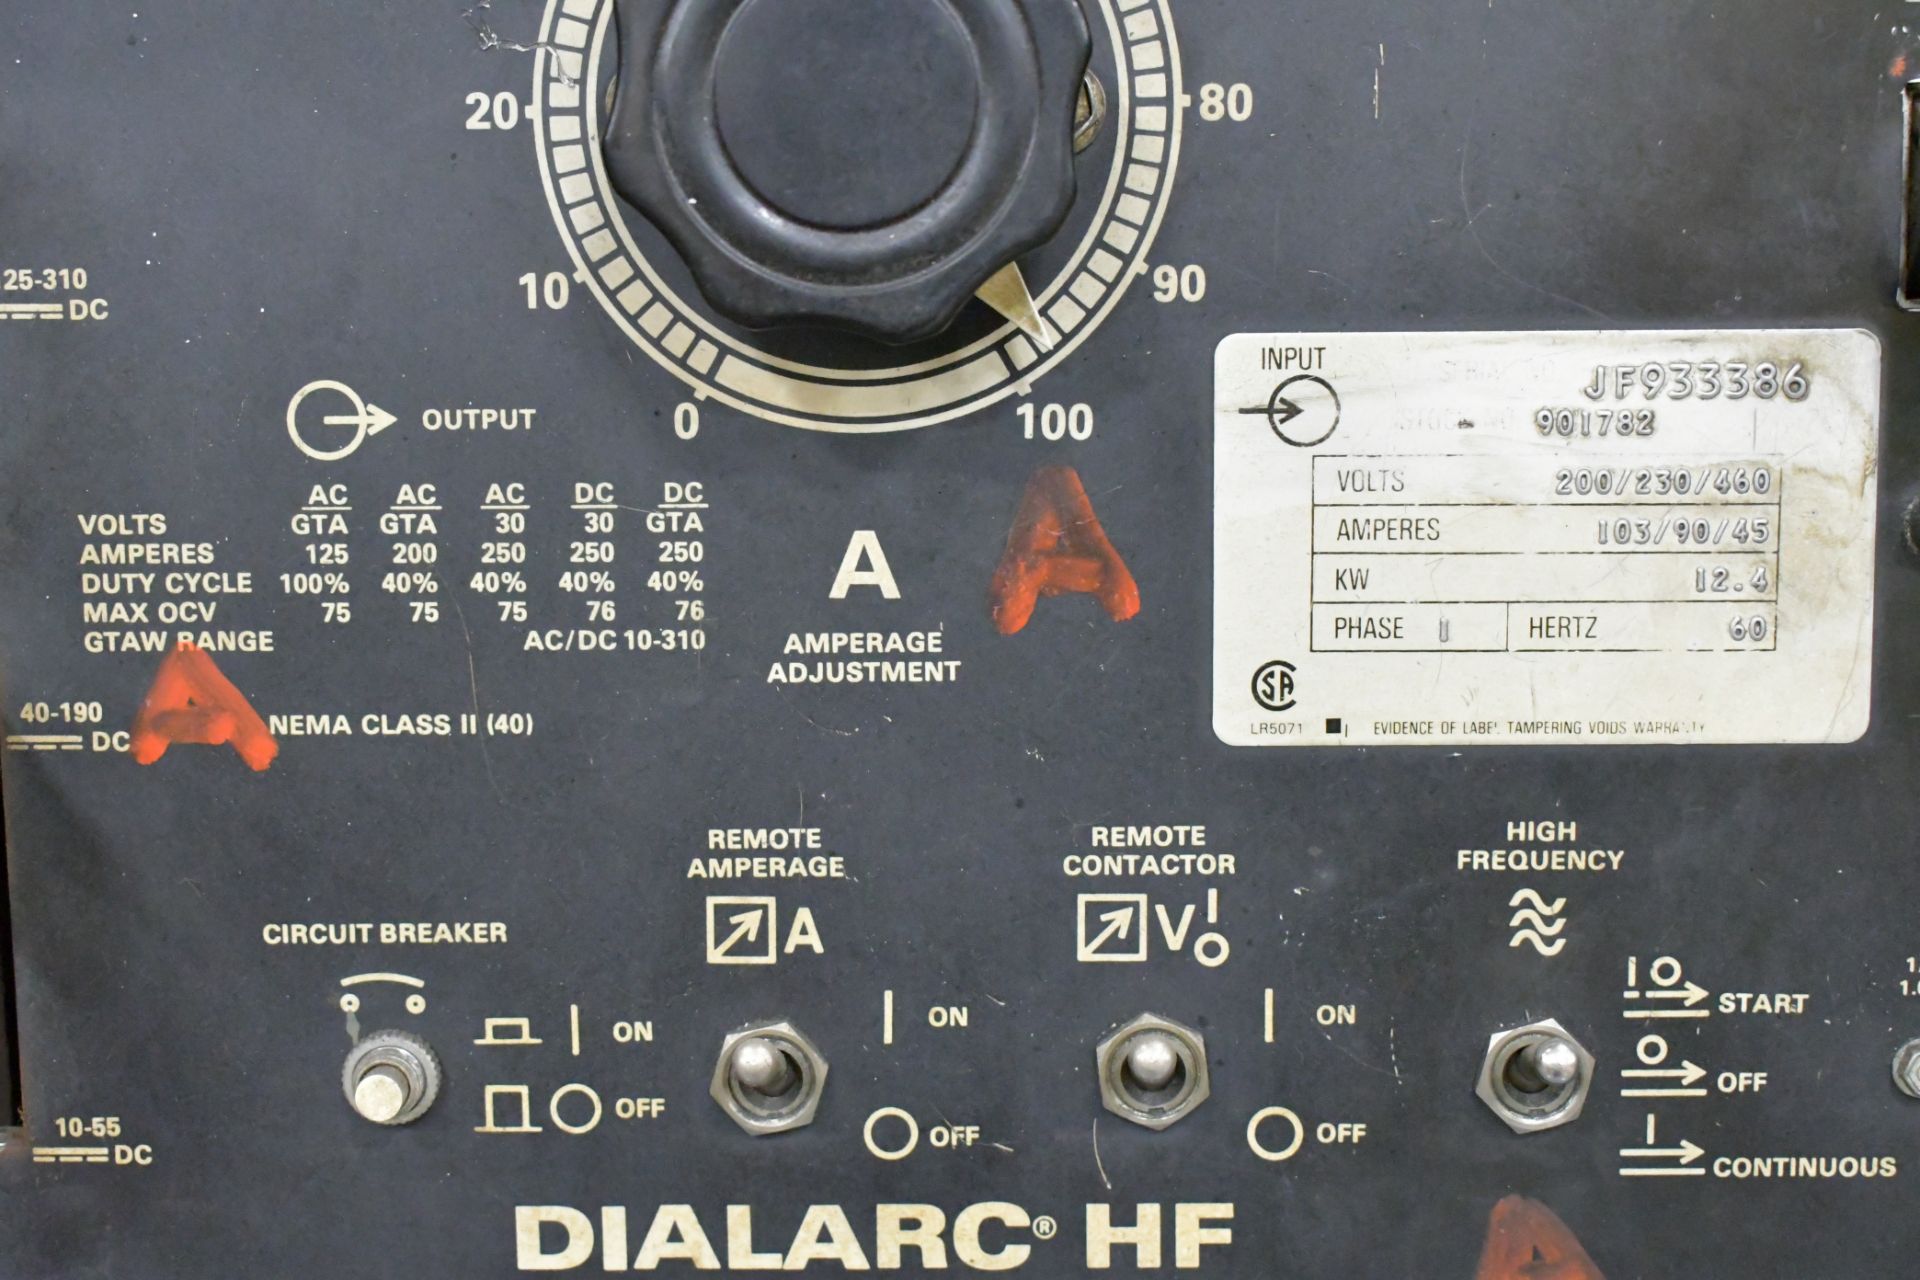 Miller Dialarc HF, 250-Amp Capacity CC AC/DC Tig Welder, S/n JF933386, 1-PH, Foot Pedal Control, - Image 4 of 4